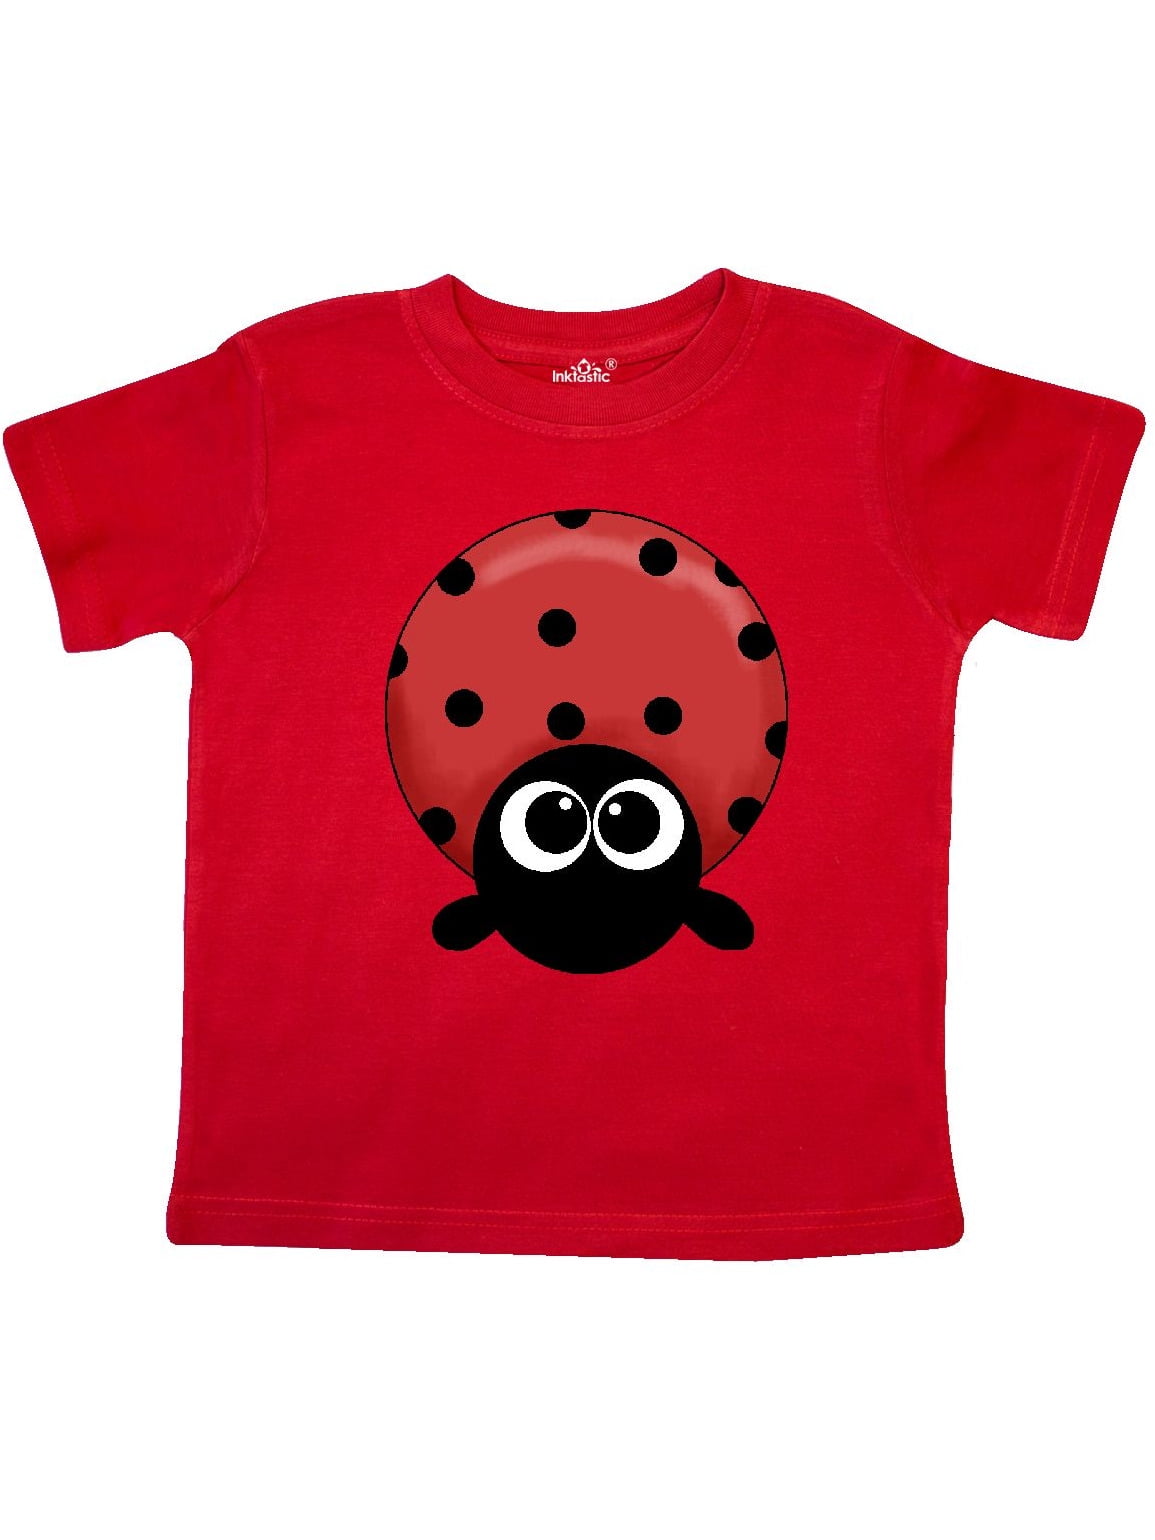 INKtastic - Round Lady Bug Toddler T-Shirt - Walmart.com - Walmart.com